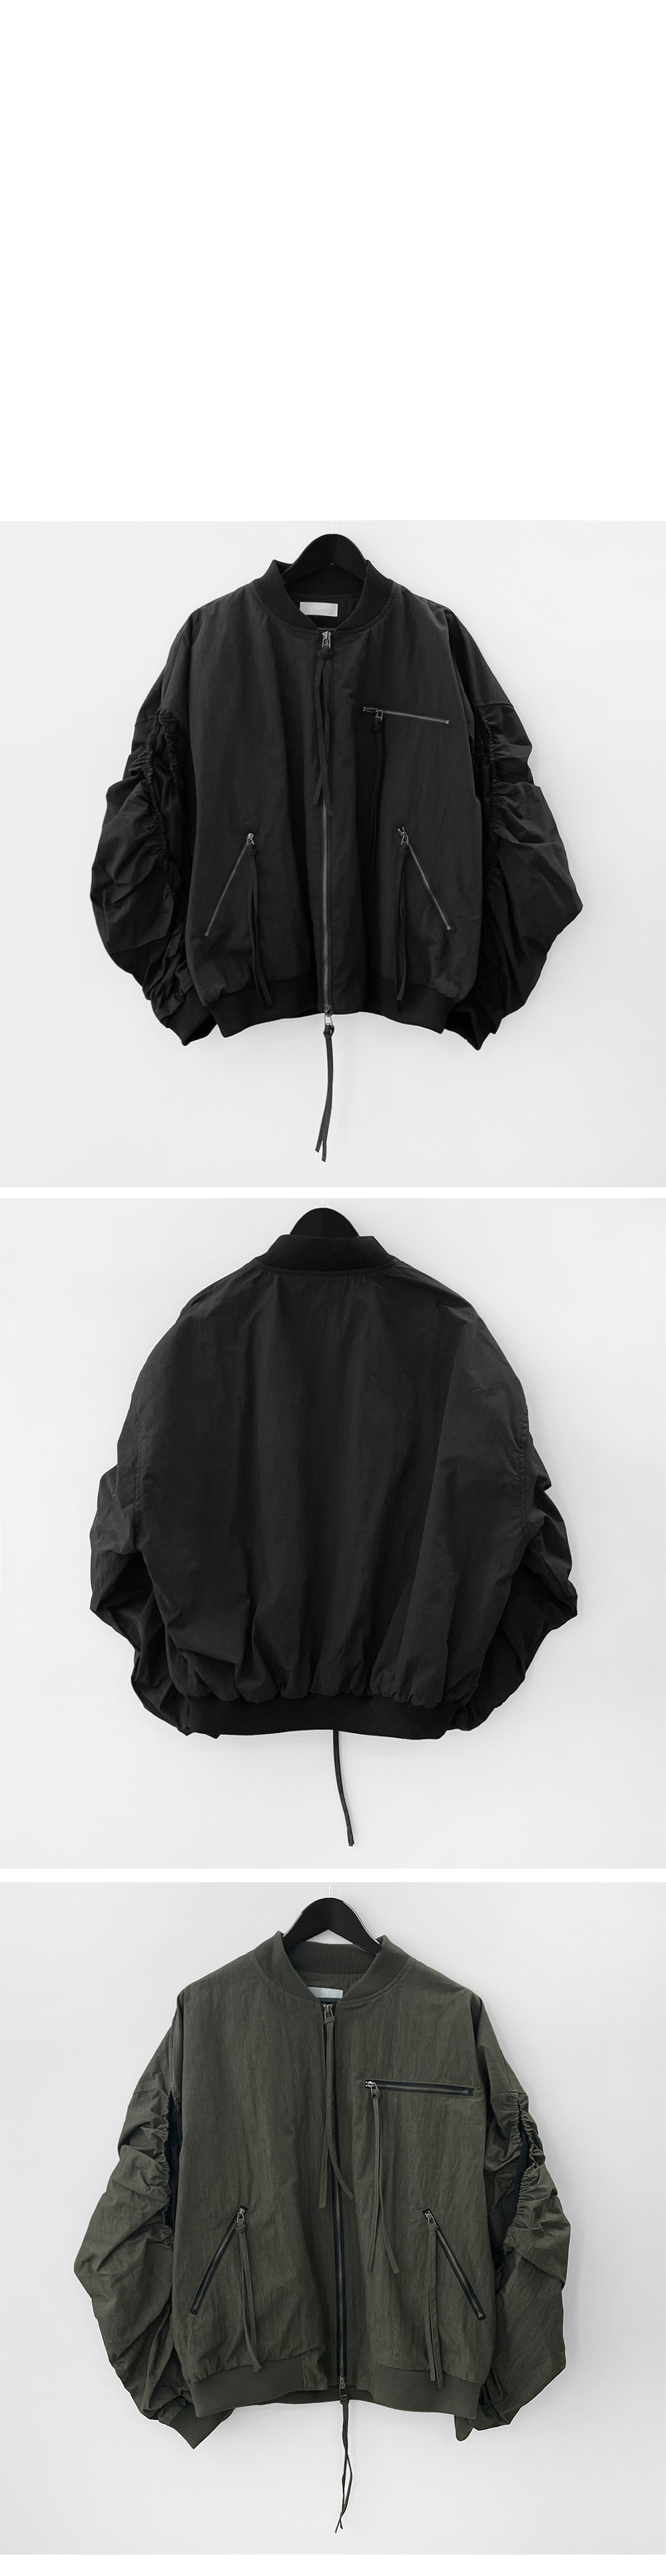 jacket charcoal color image-S1L12